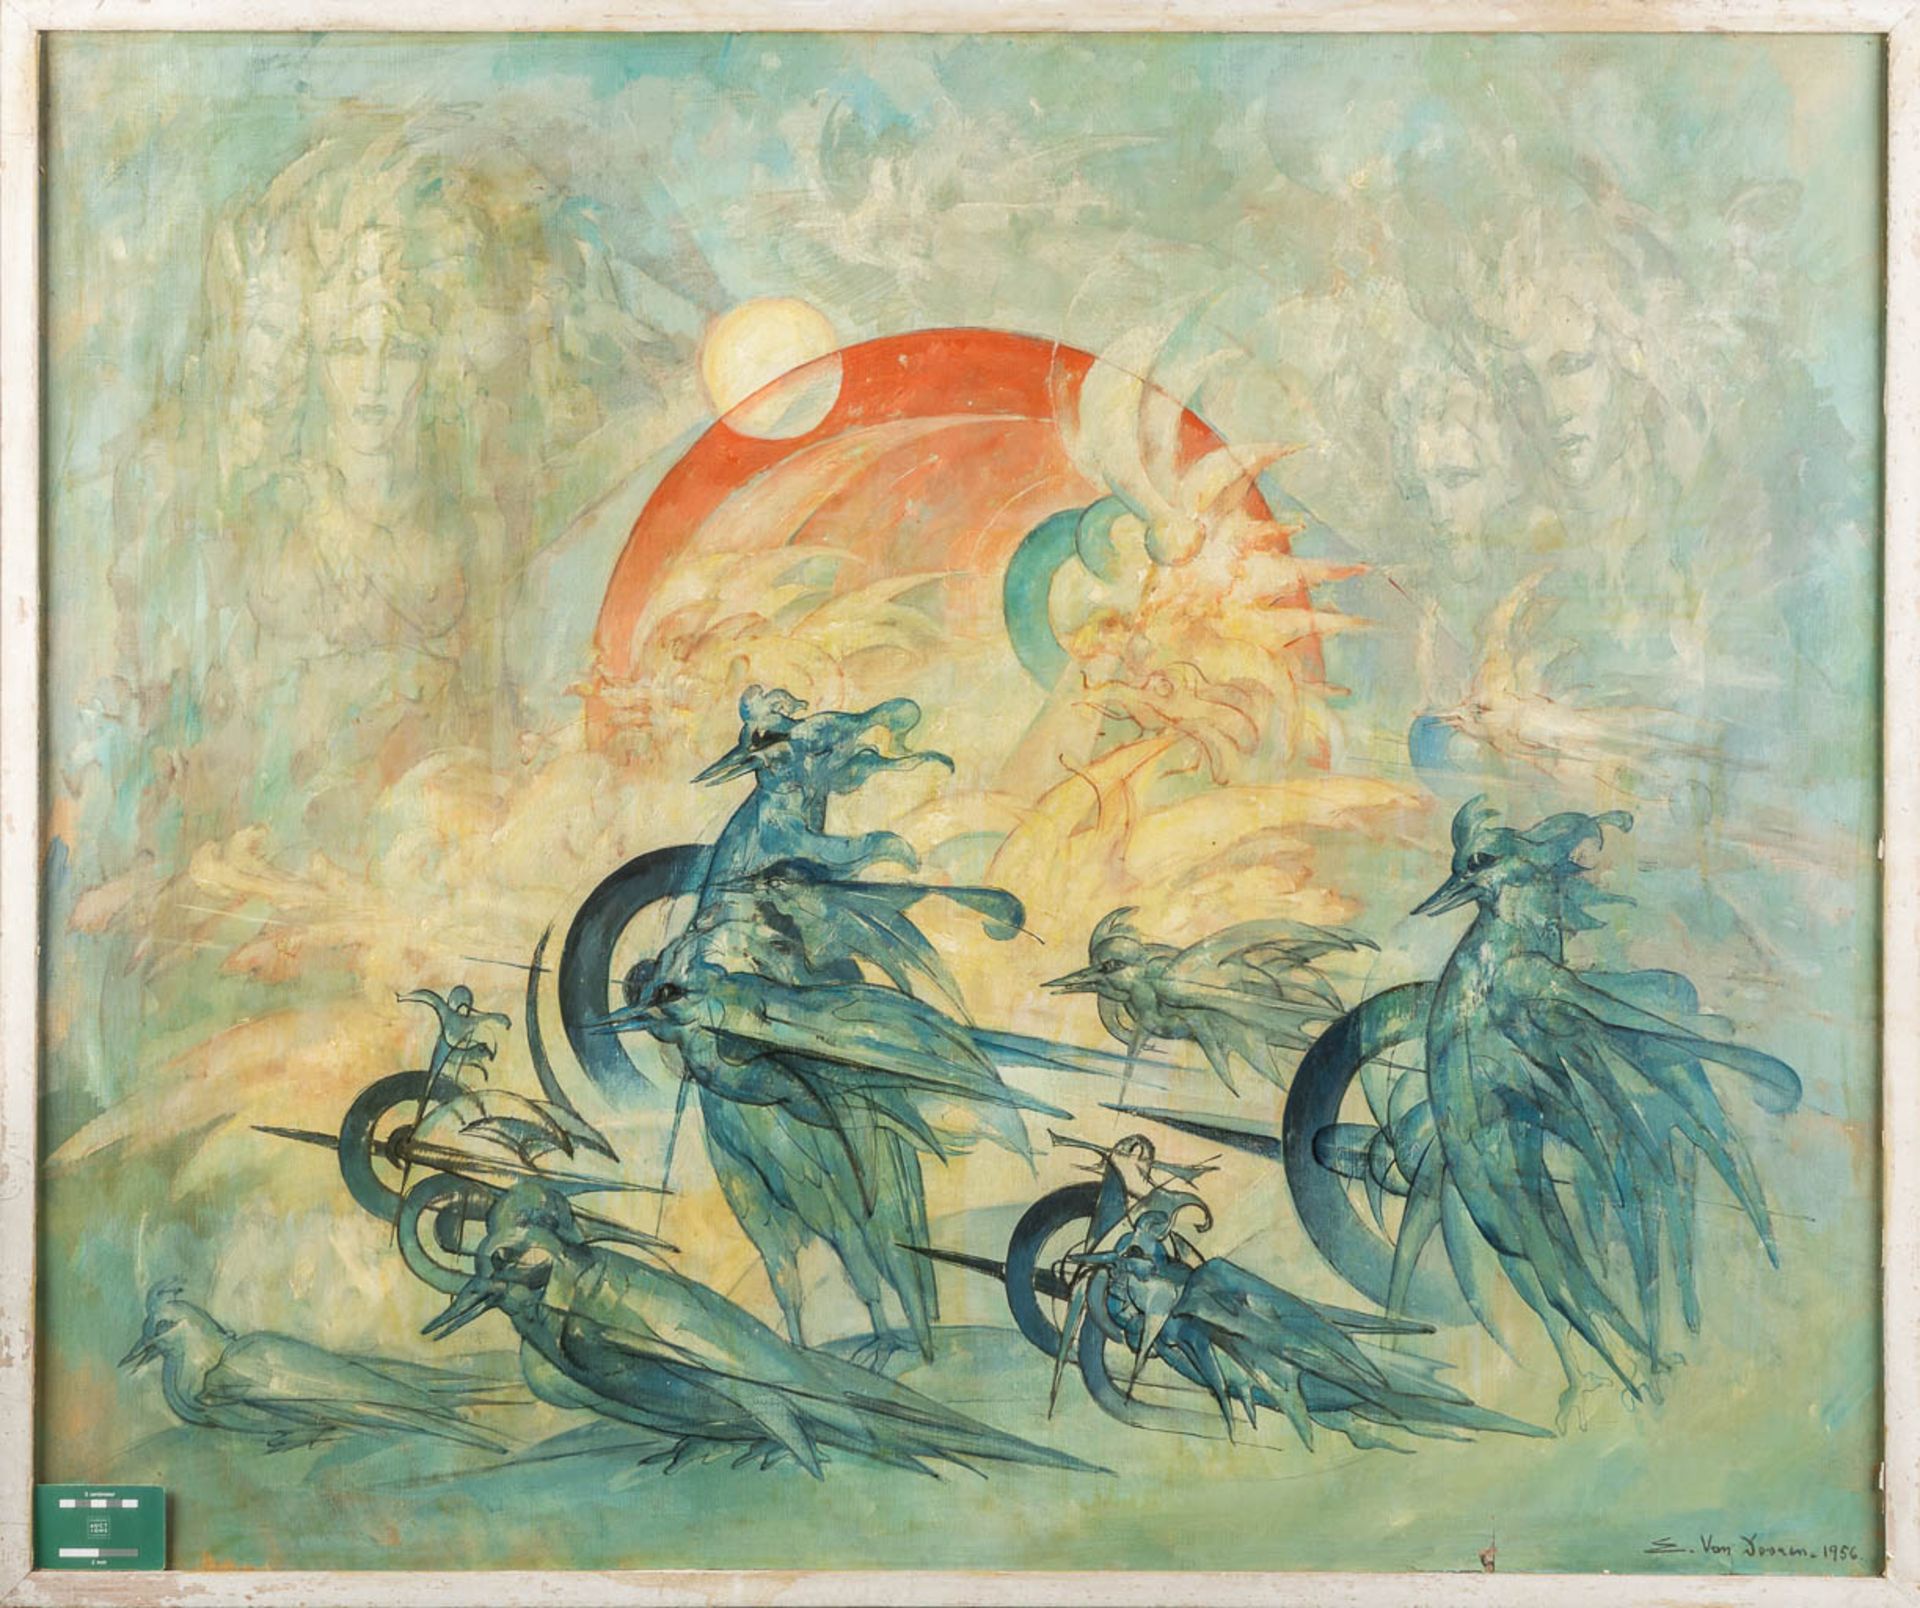 Edmond VAN DOOREN (1896-1965) 'Futuristic composition' oil on canvas. 1956. (W:120 x H:100 cm) - Image 2 of 11